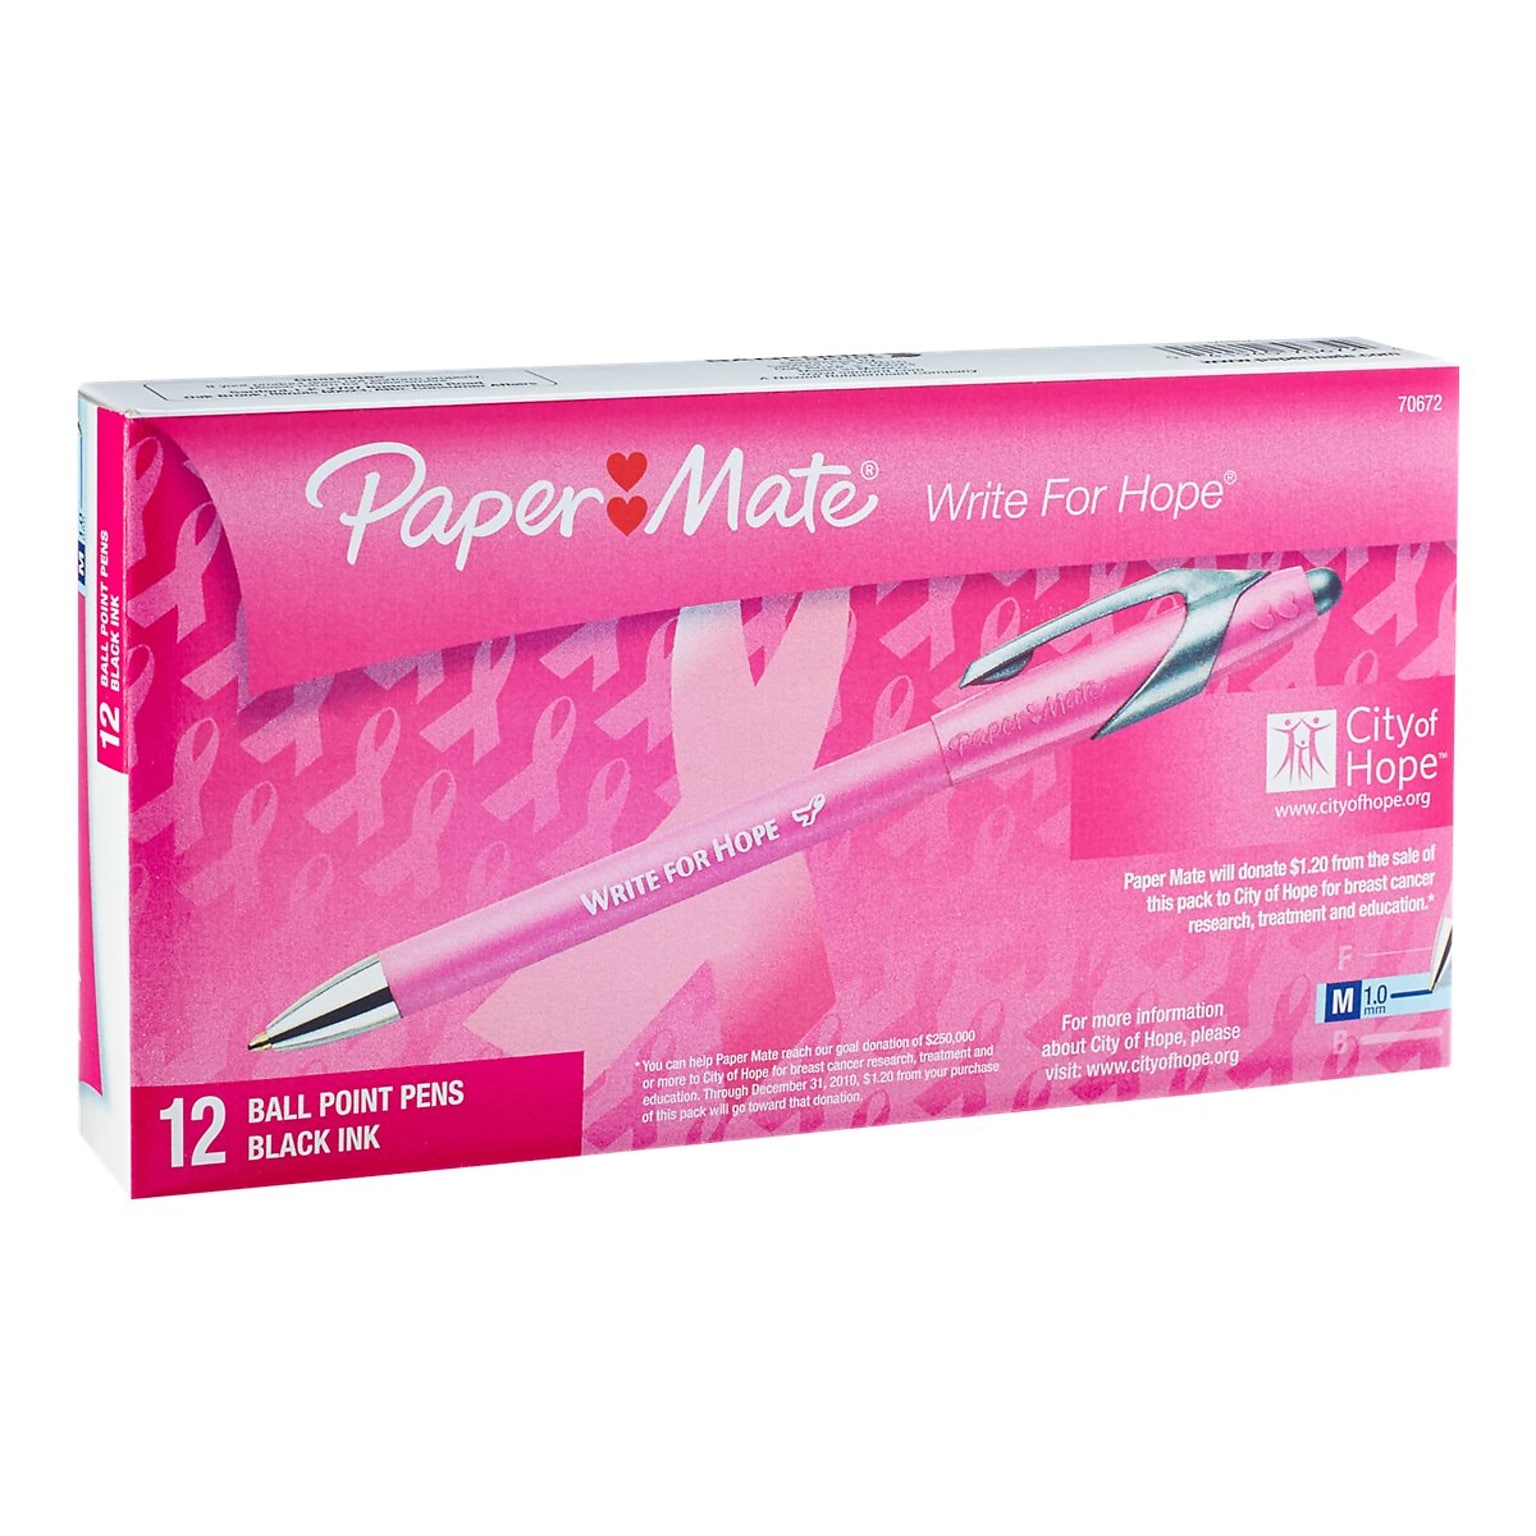 Paper Mate FlexGrip Elite Write for Hope Retractable Ballpoint Pen, Medium Point, Black Ink, Dozen (70672)